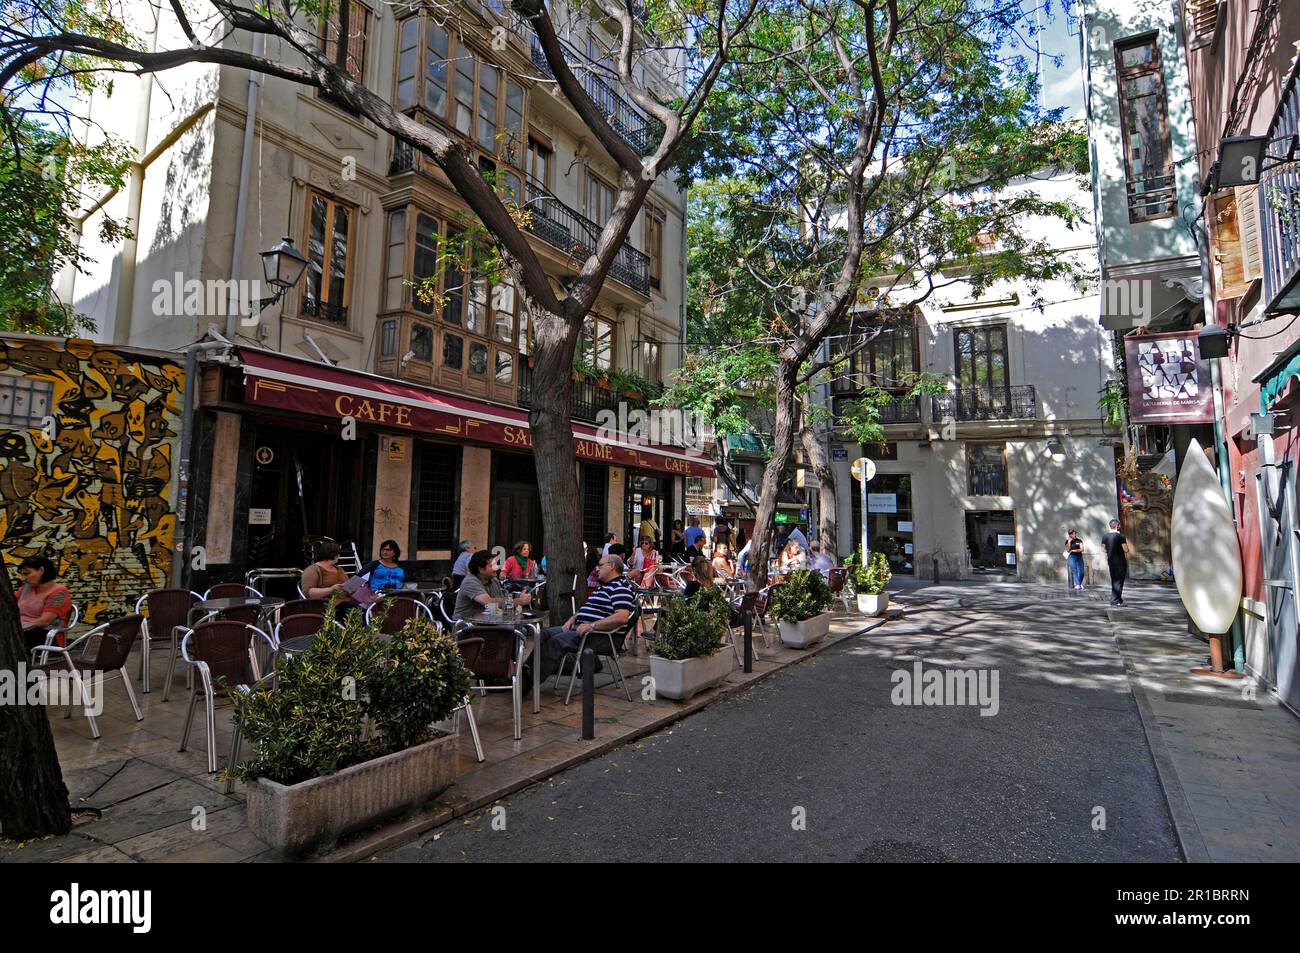 Street cafe, sidewalk cafe, restaurant, Barrio del Carmen, district, Valencia, Spain Stock Photo